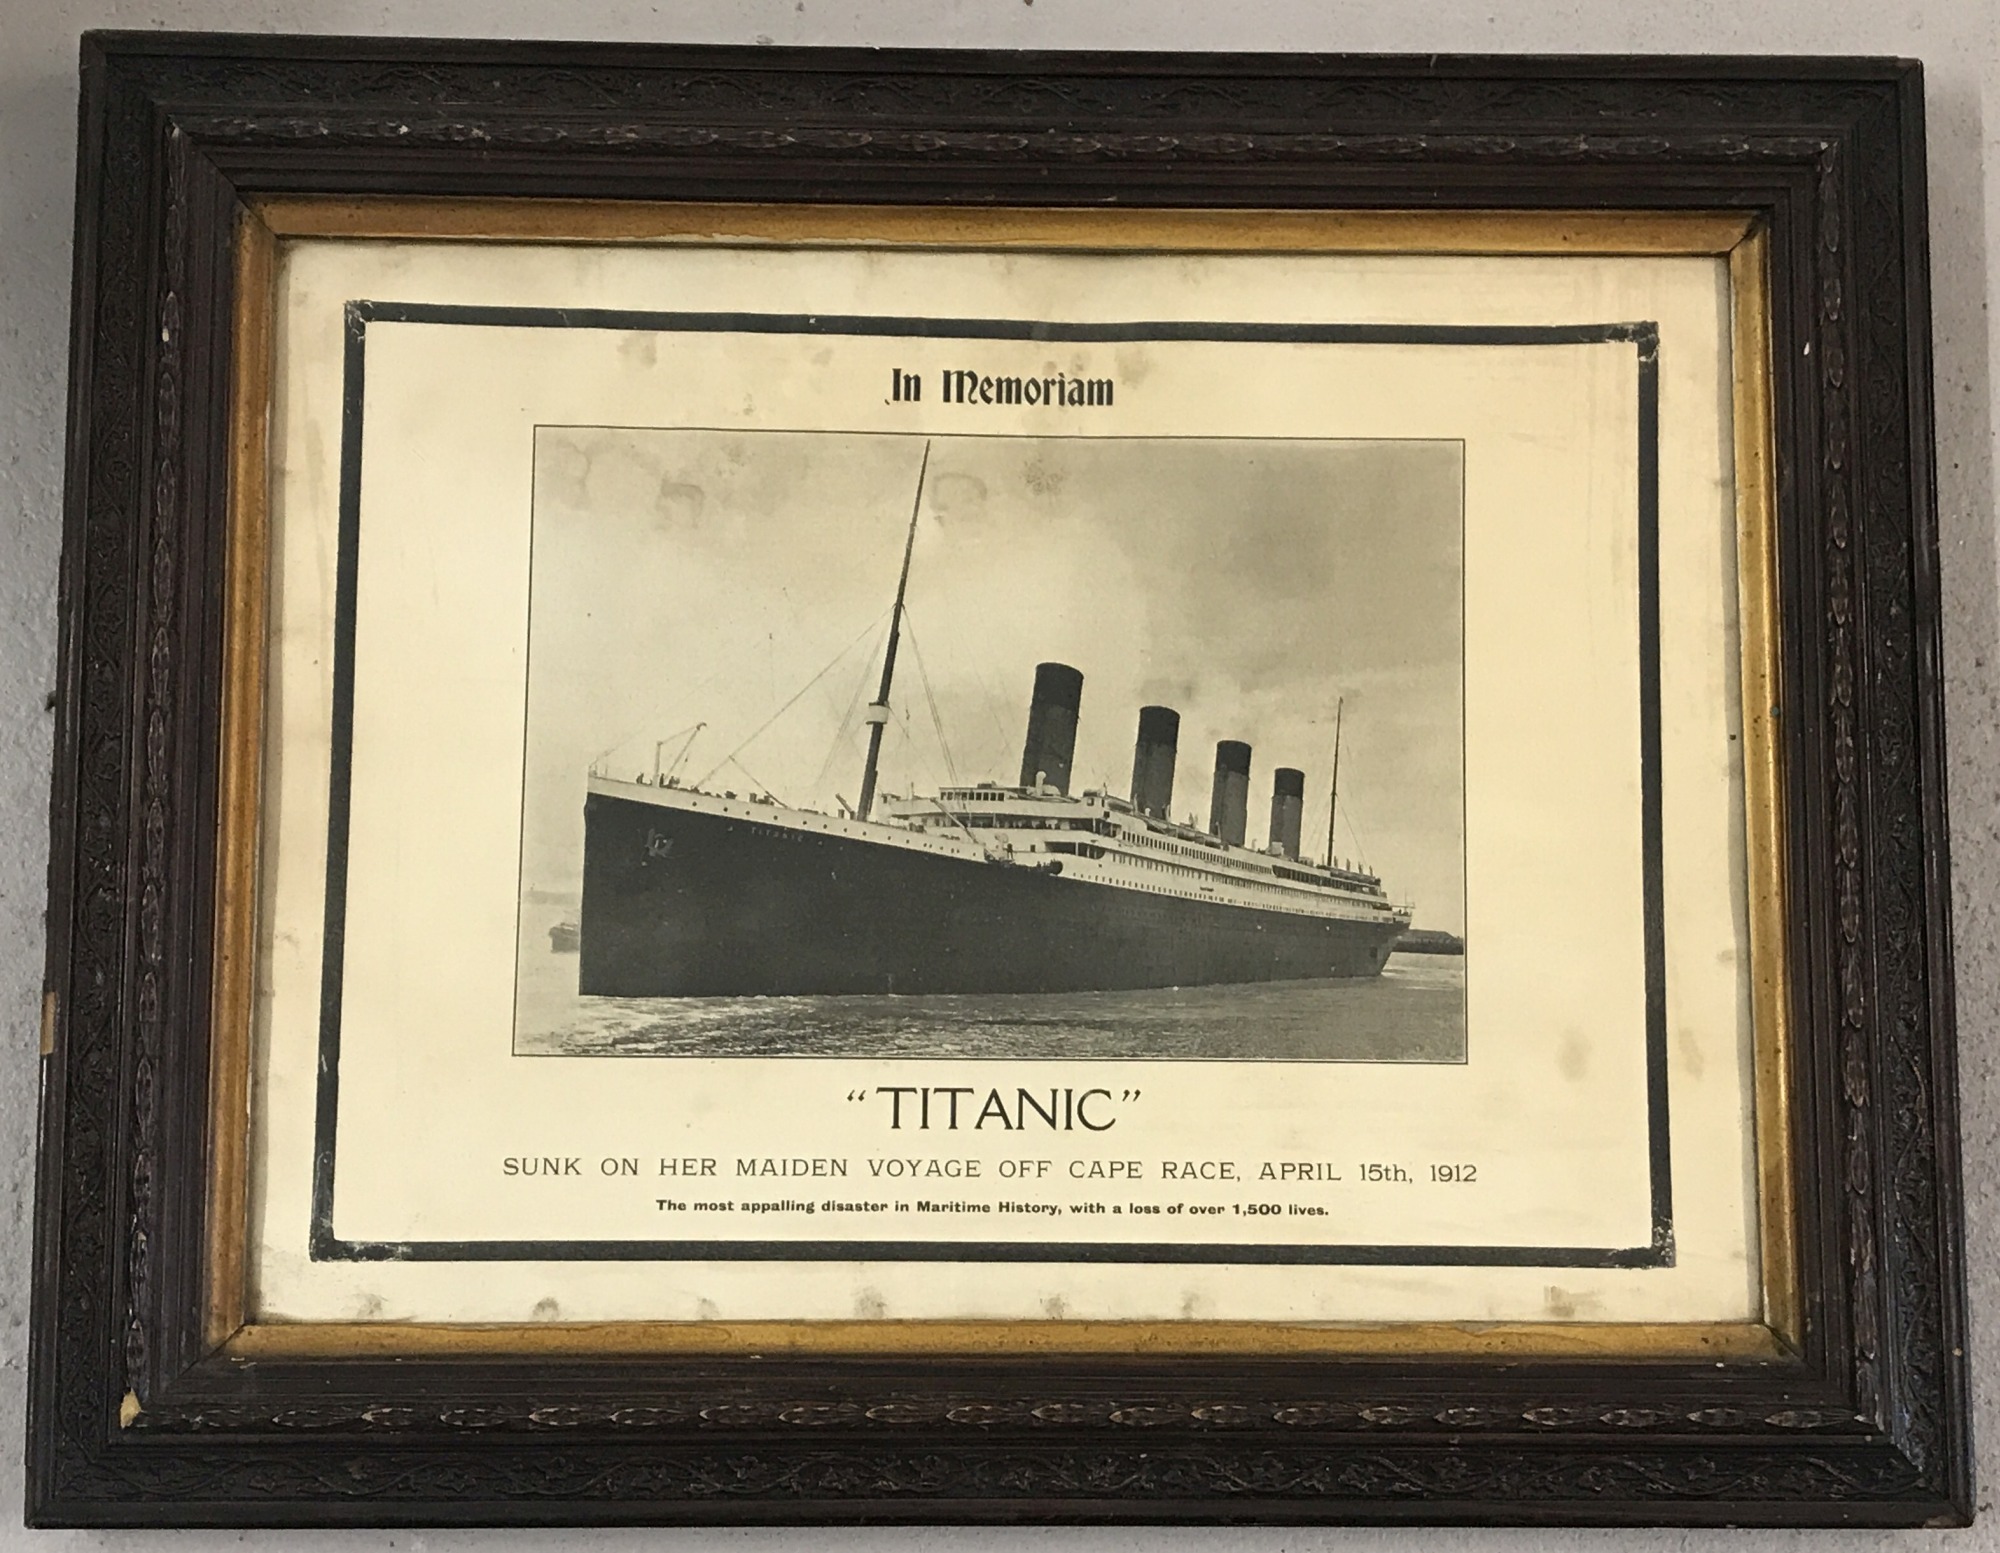 A framed and glazed commemorative print In Memoriam "Titanic".